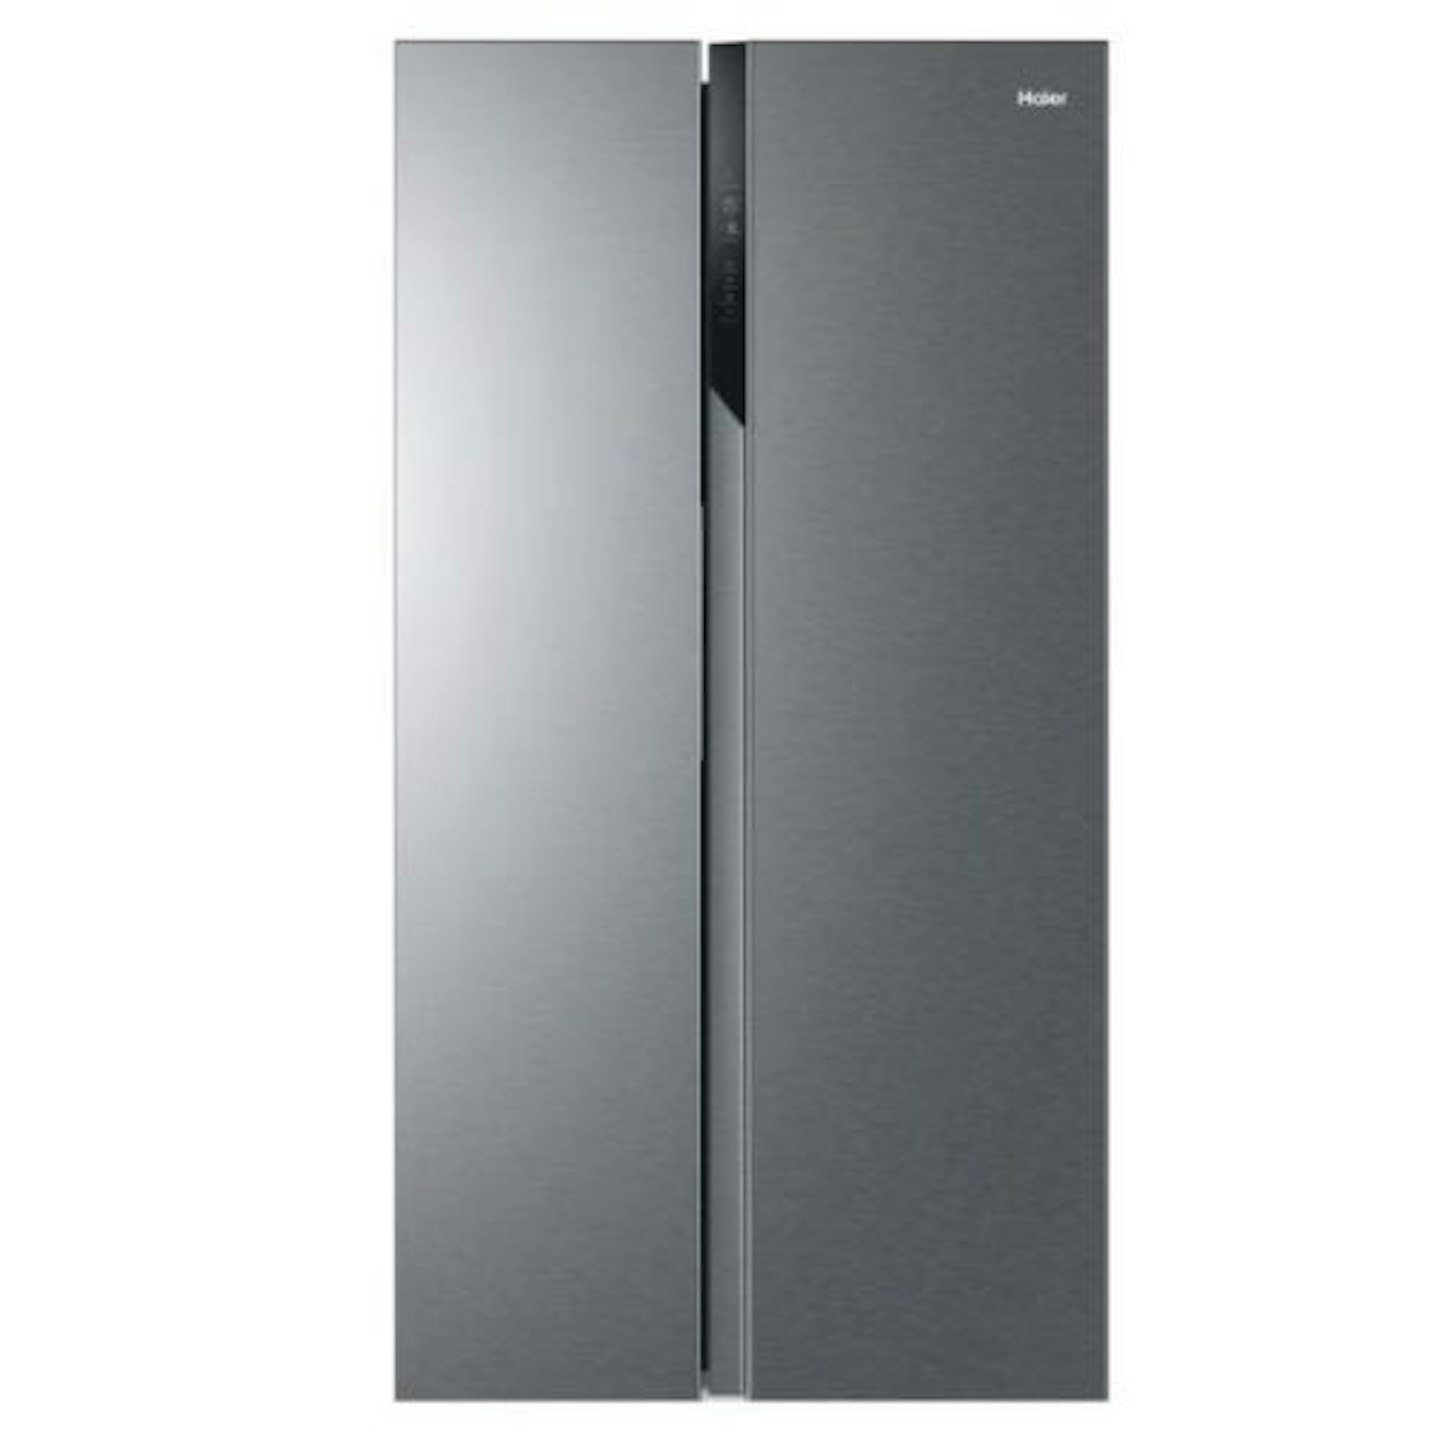 Haier American style fridge freezer SBS 90 Series 3